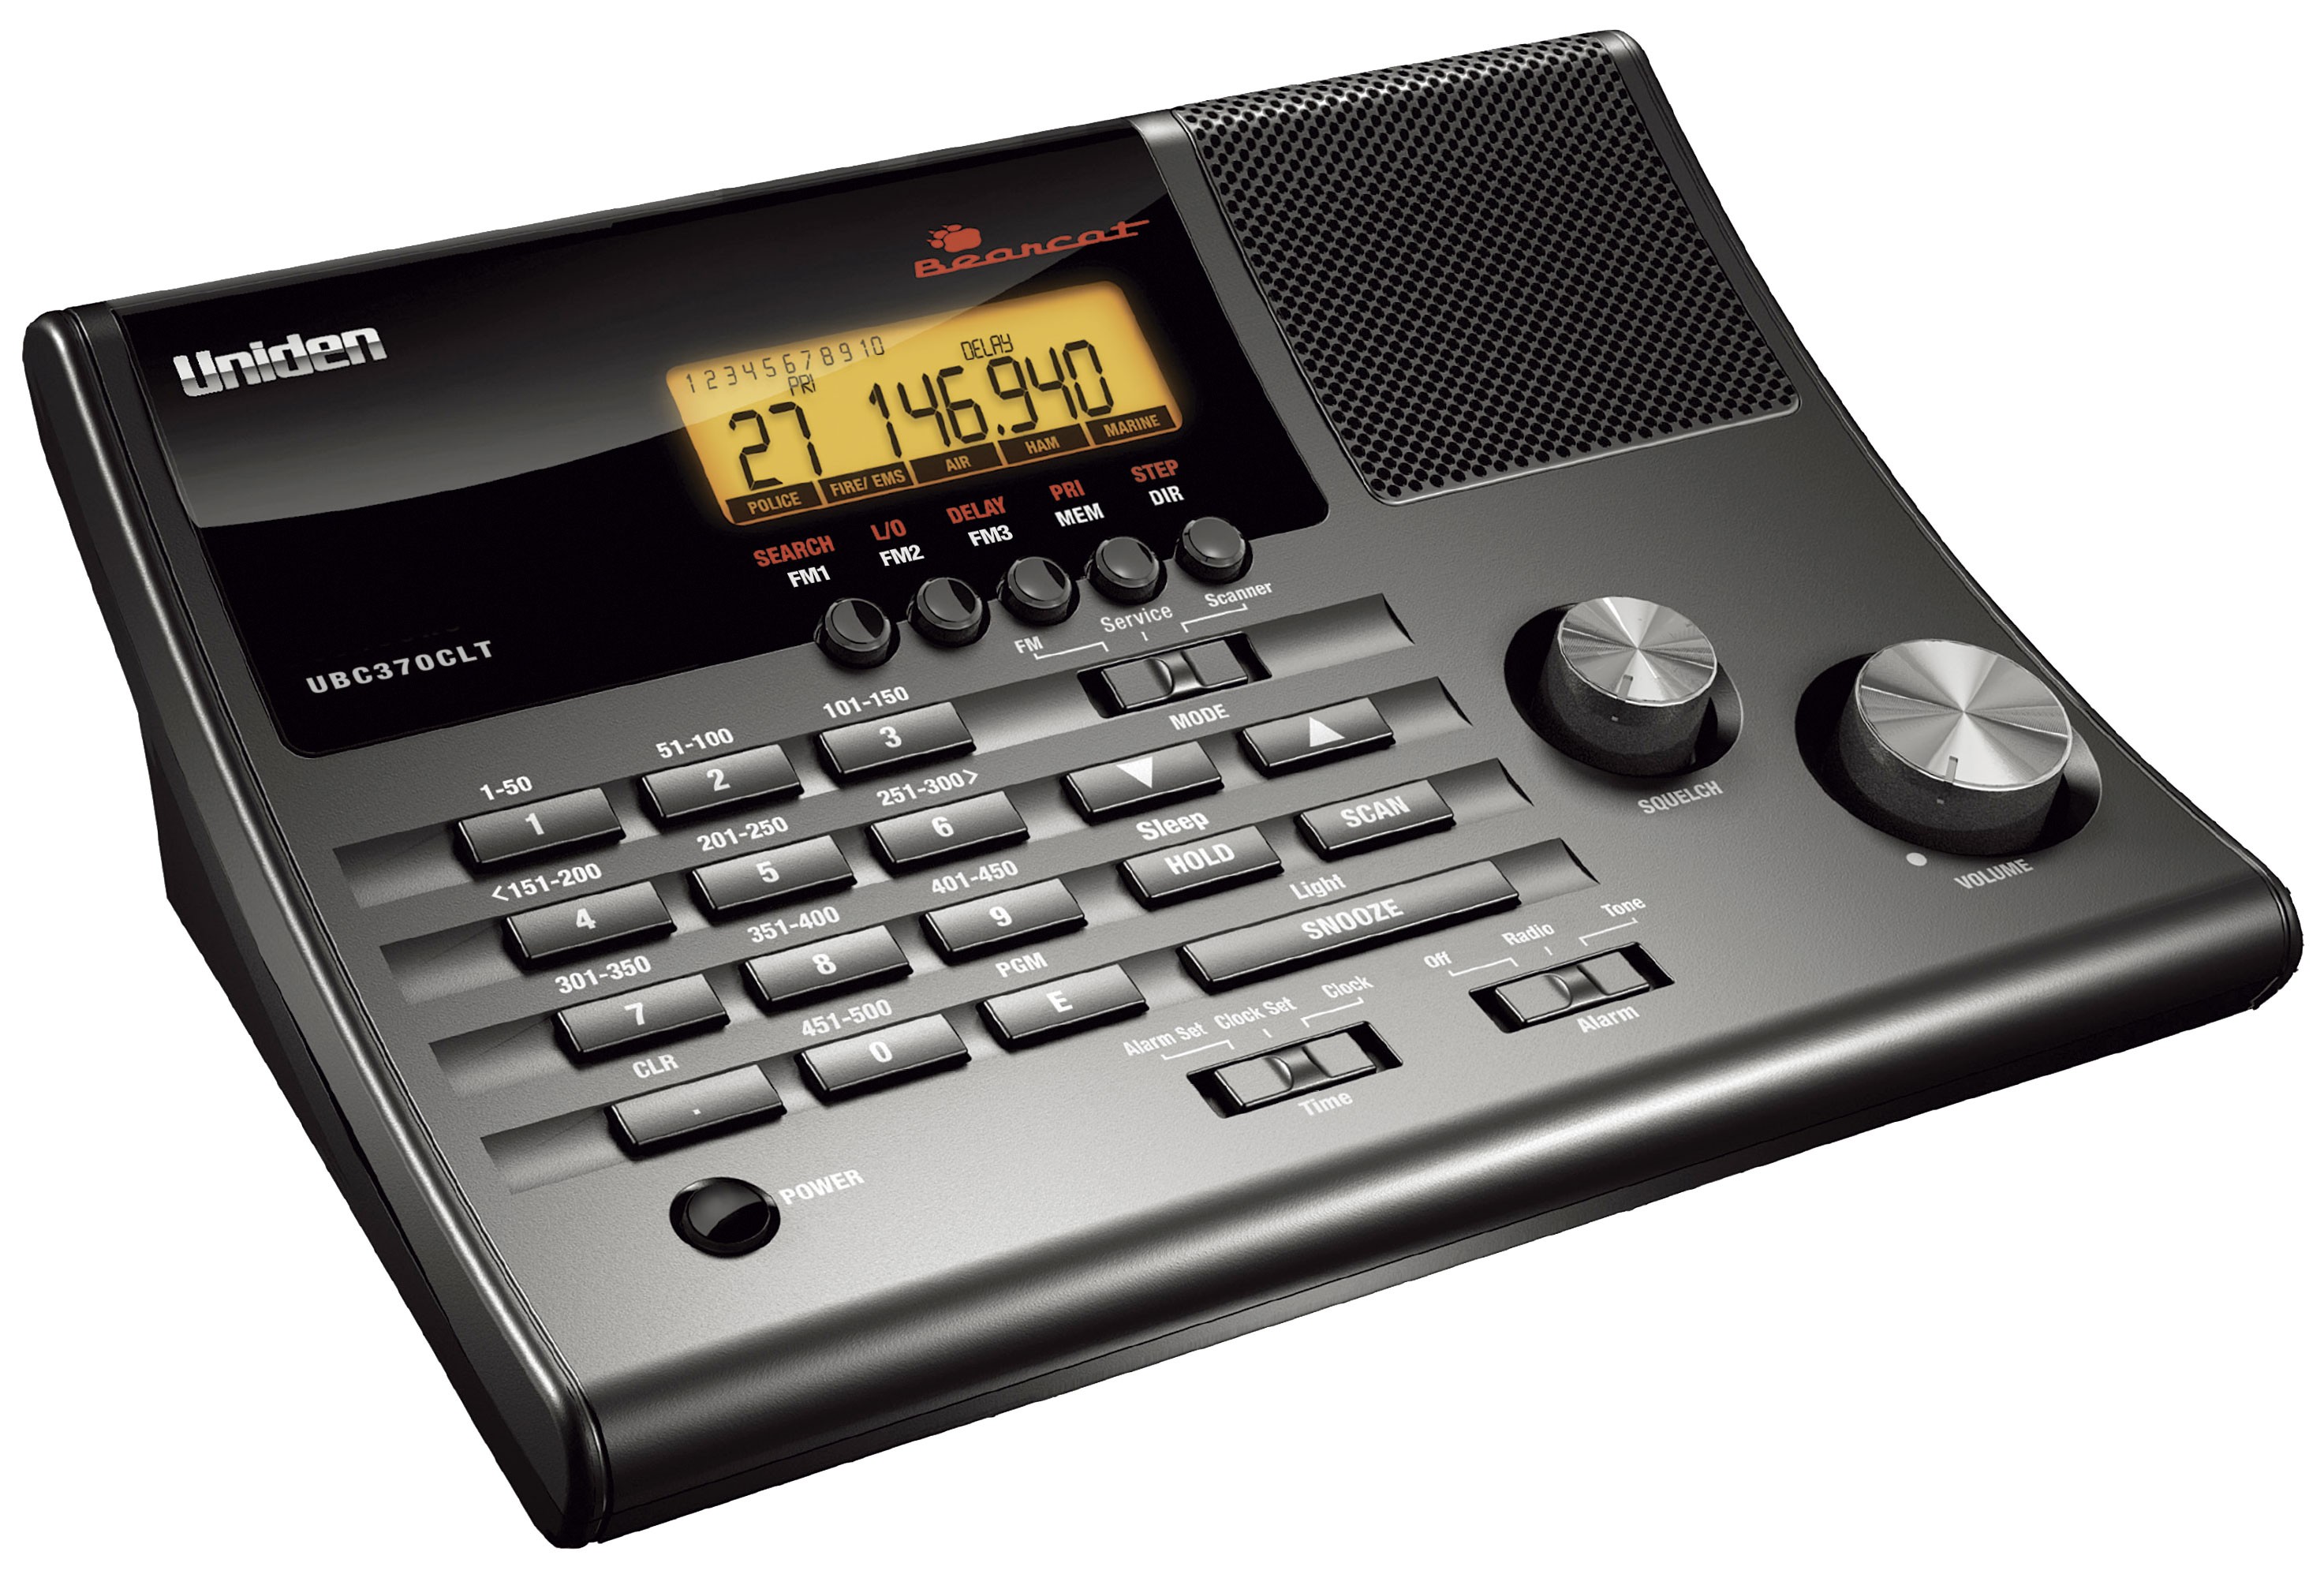 UNIDEN - UBC-370CLT - Ricevitore scanner portatile - XBS TELECOM